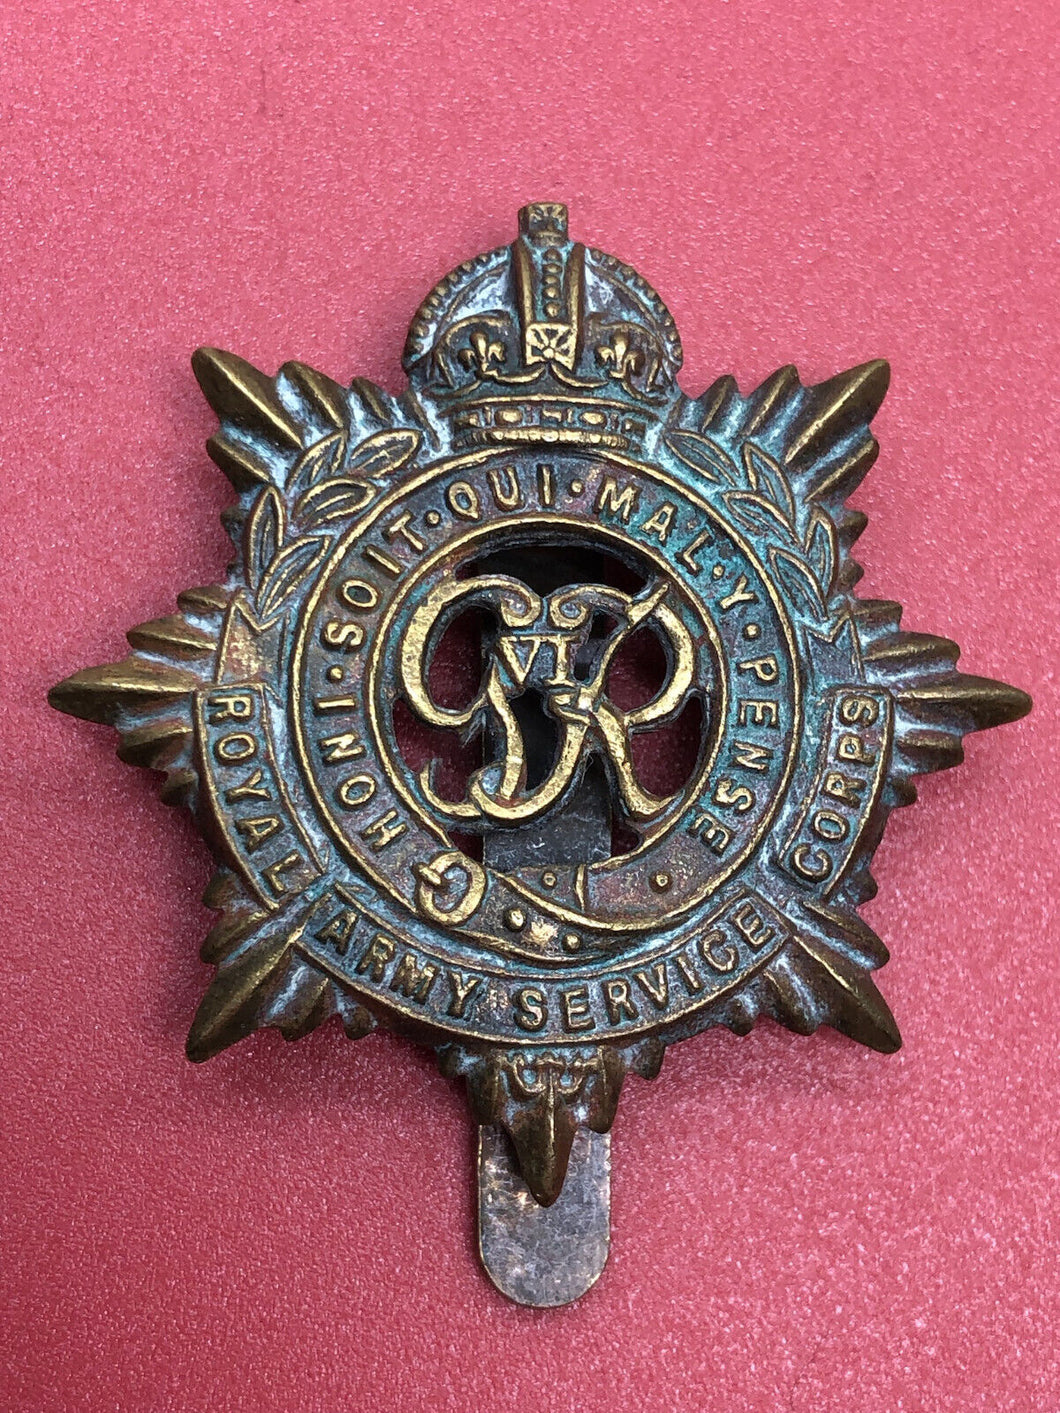 Original WW2 British Army Cap Badge - Royal Army Service Corps RASC